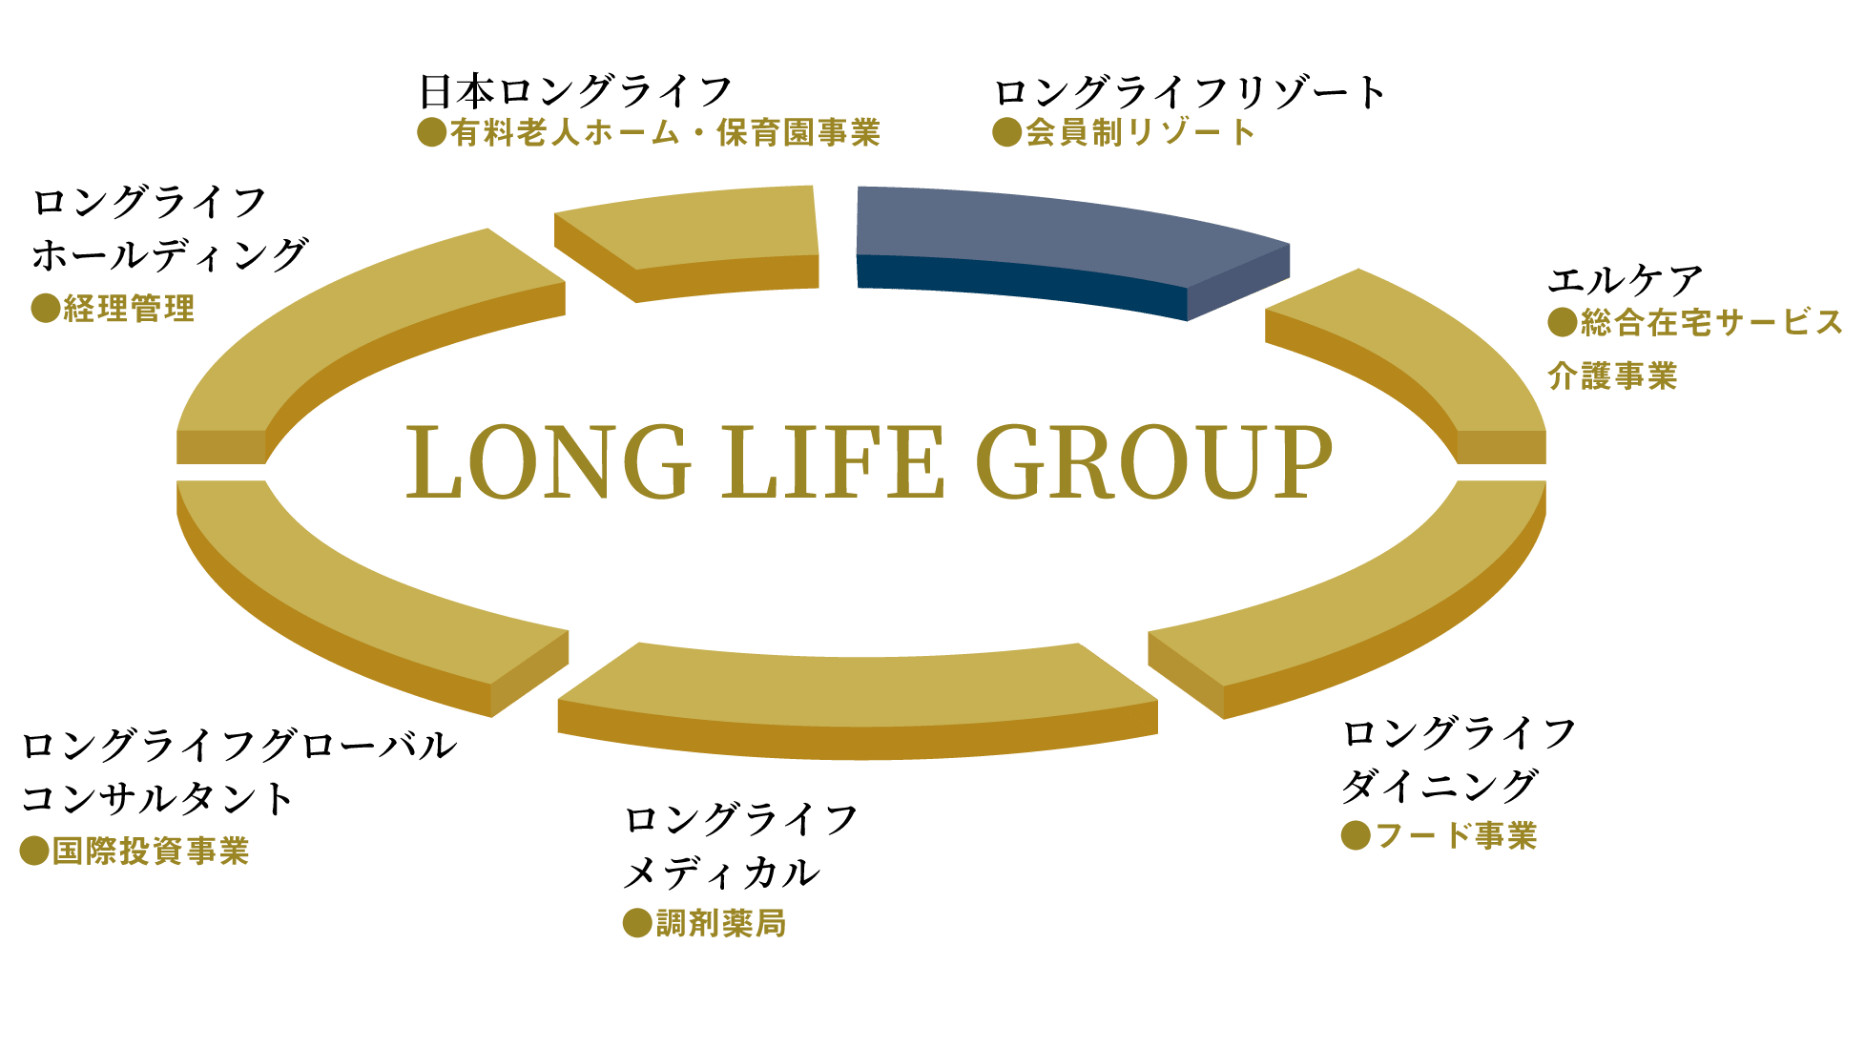 LONG LIFE GROUP